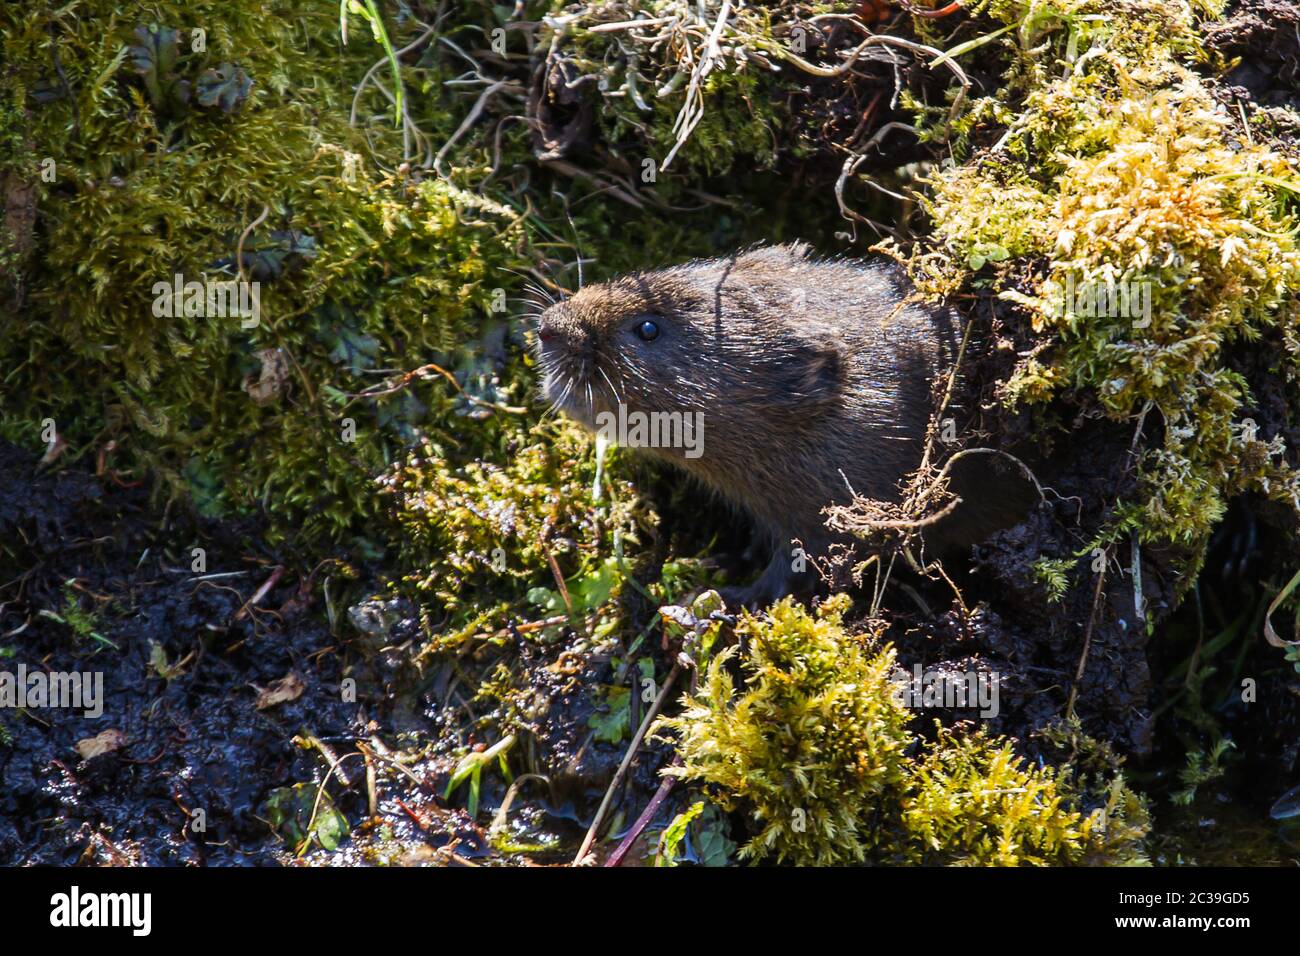 Closeup photo of a Water vole Stock Photo